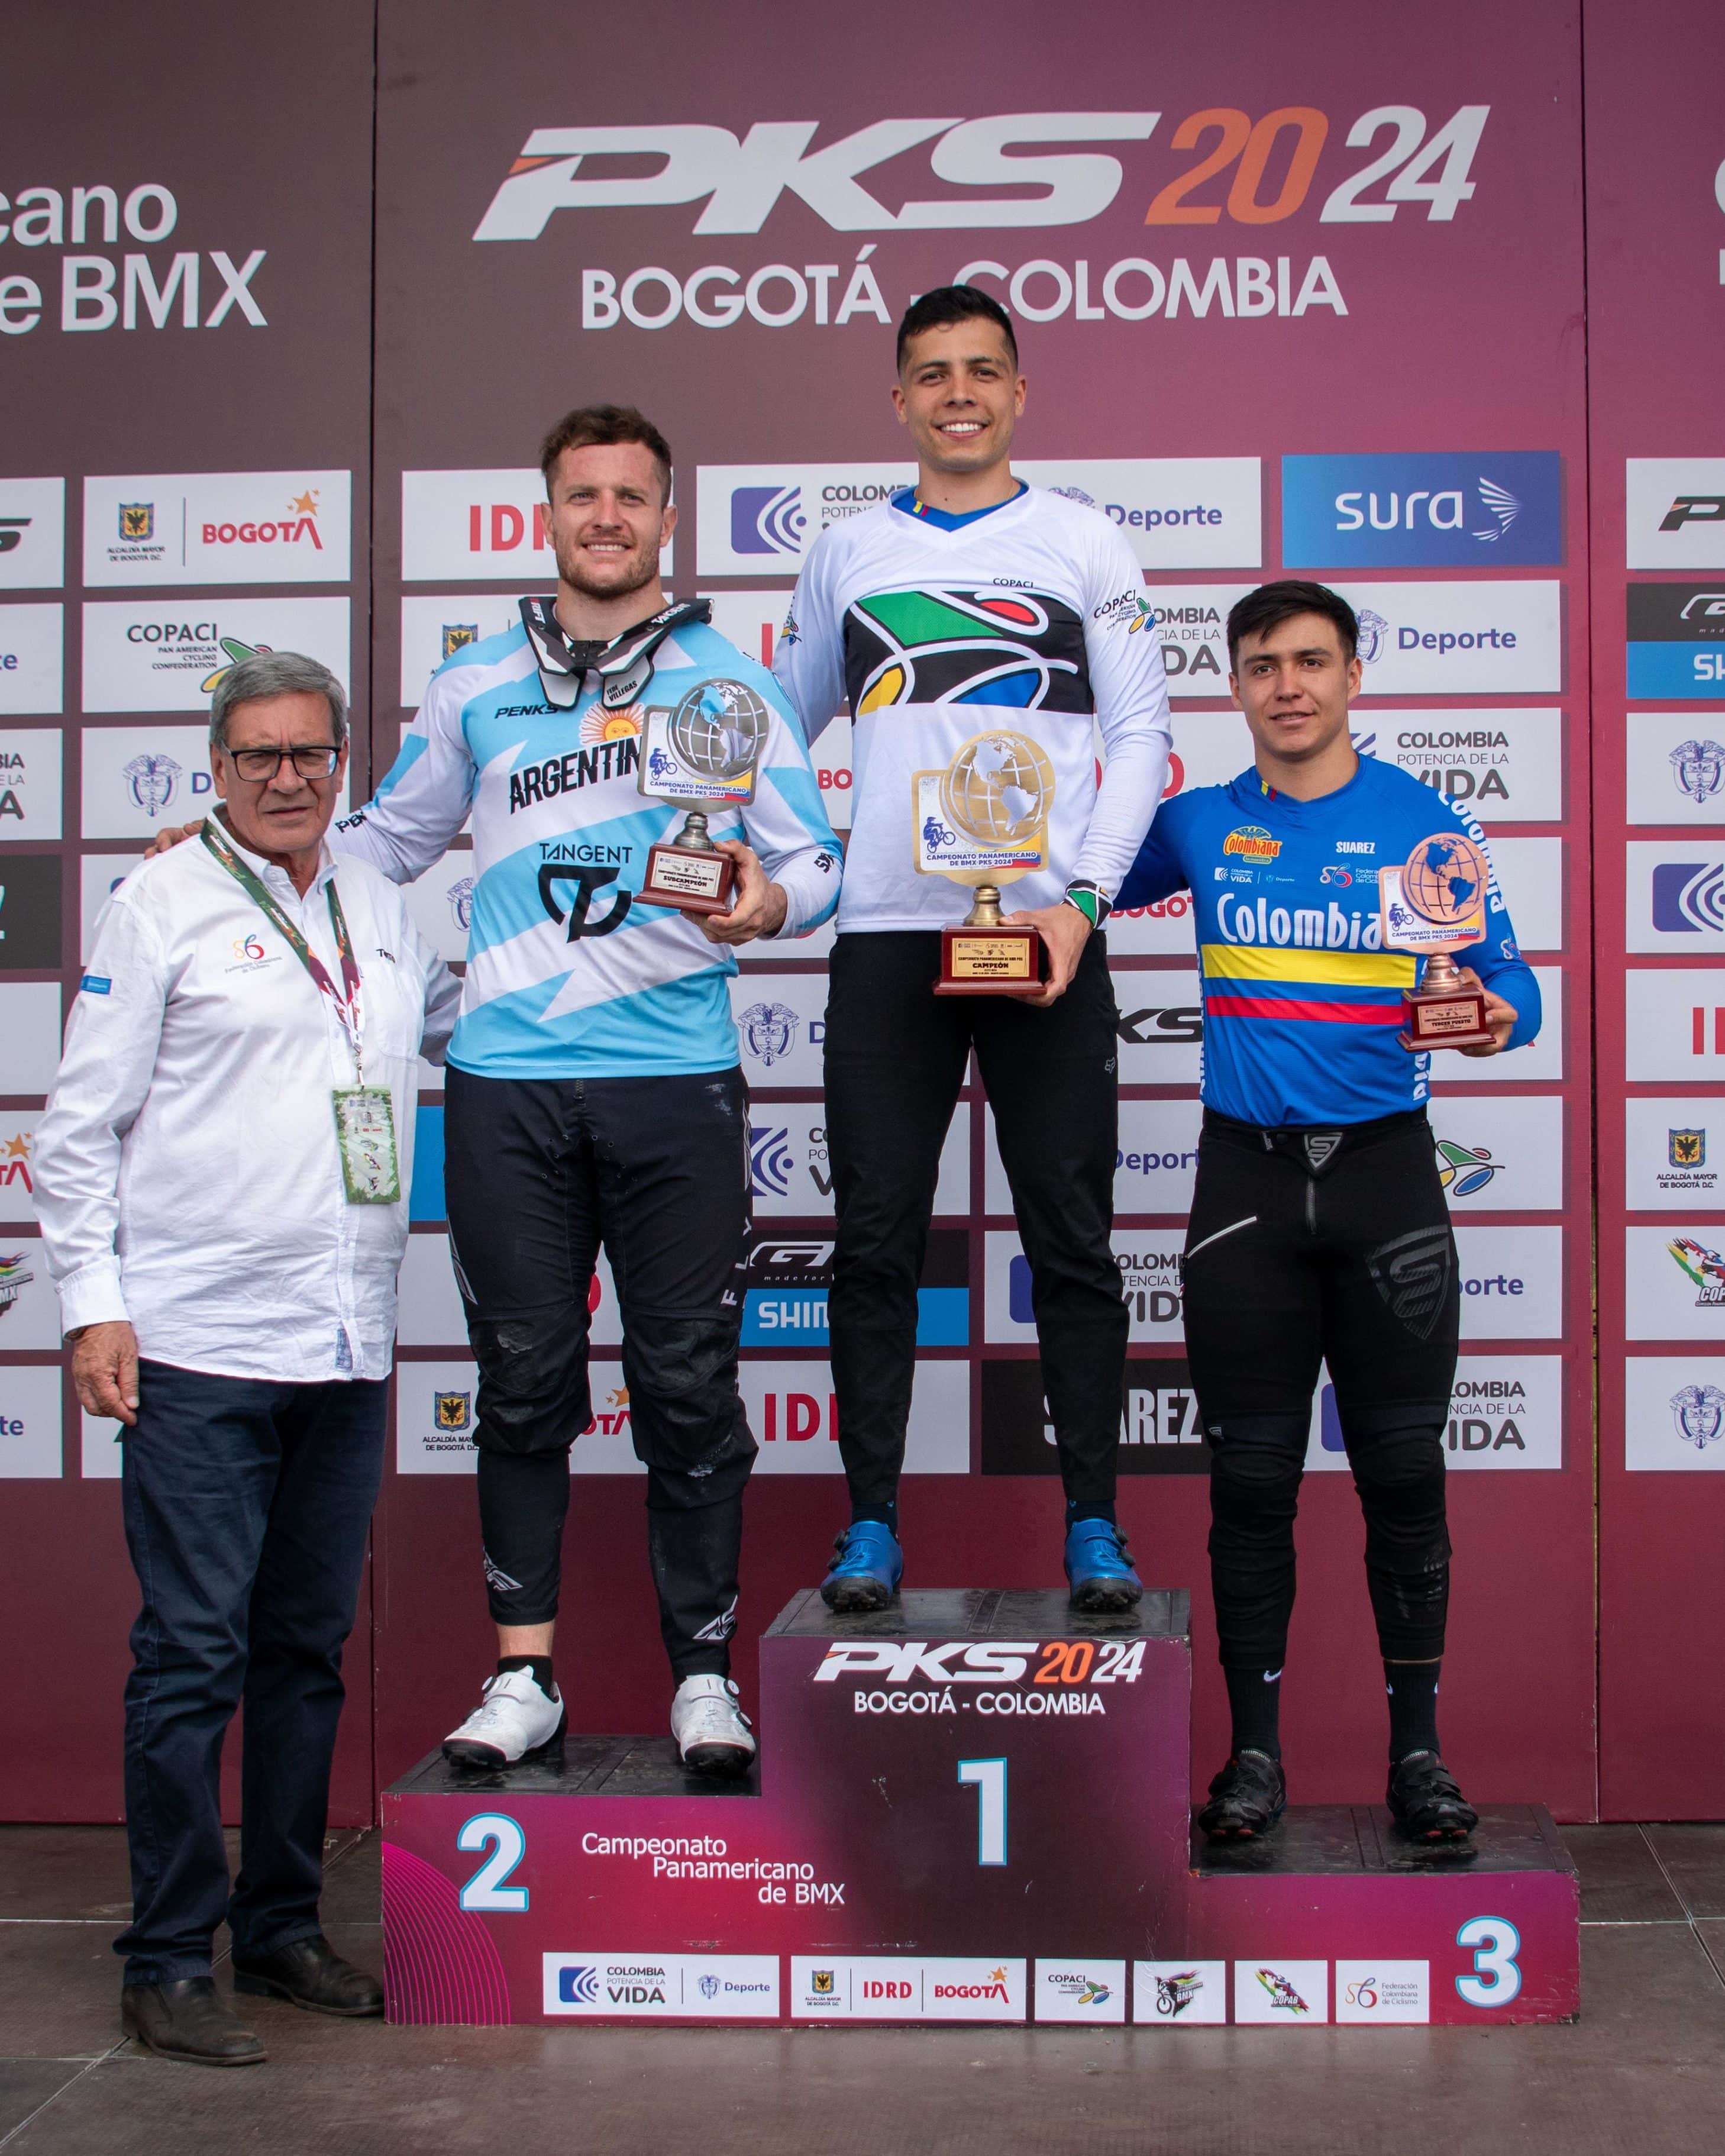 Panamericano BMX